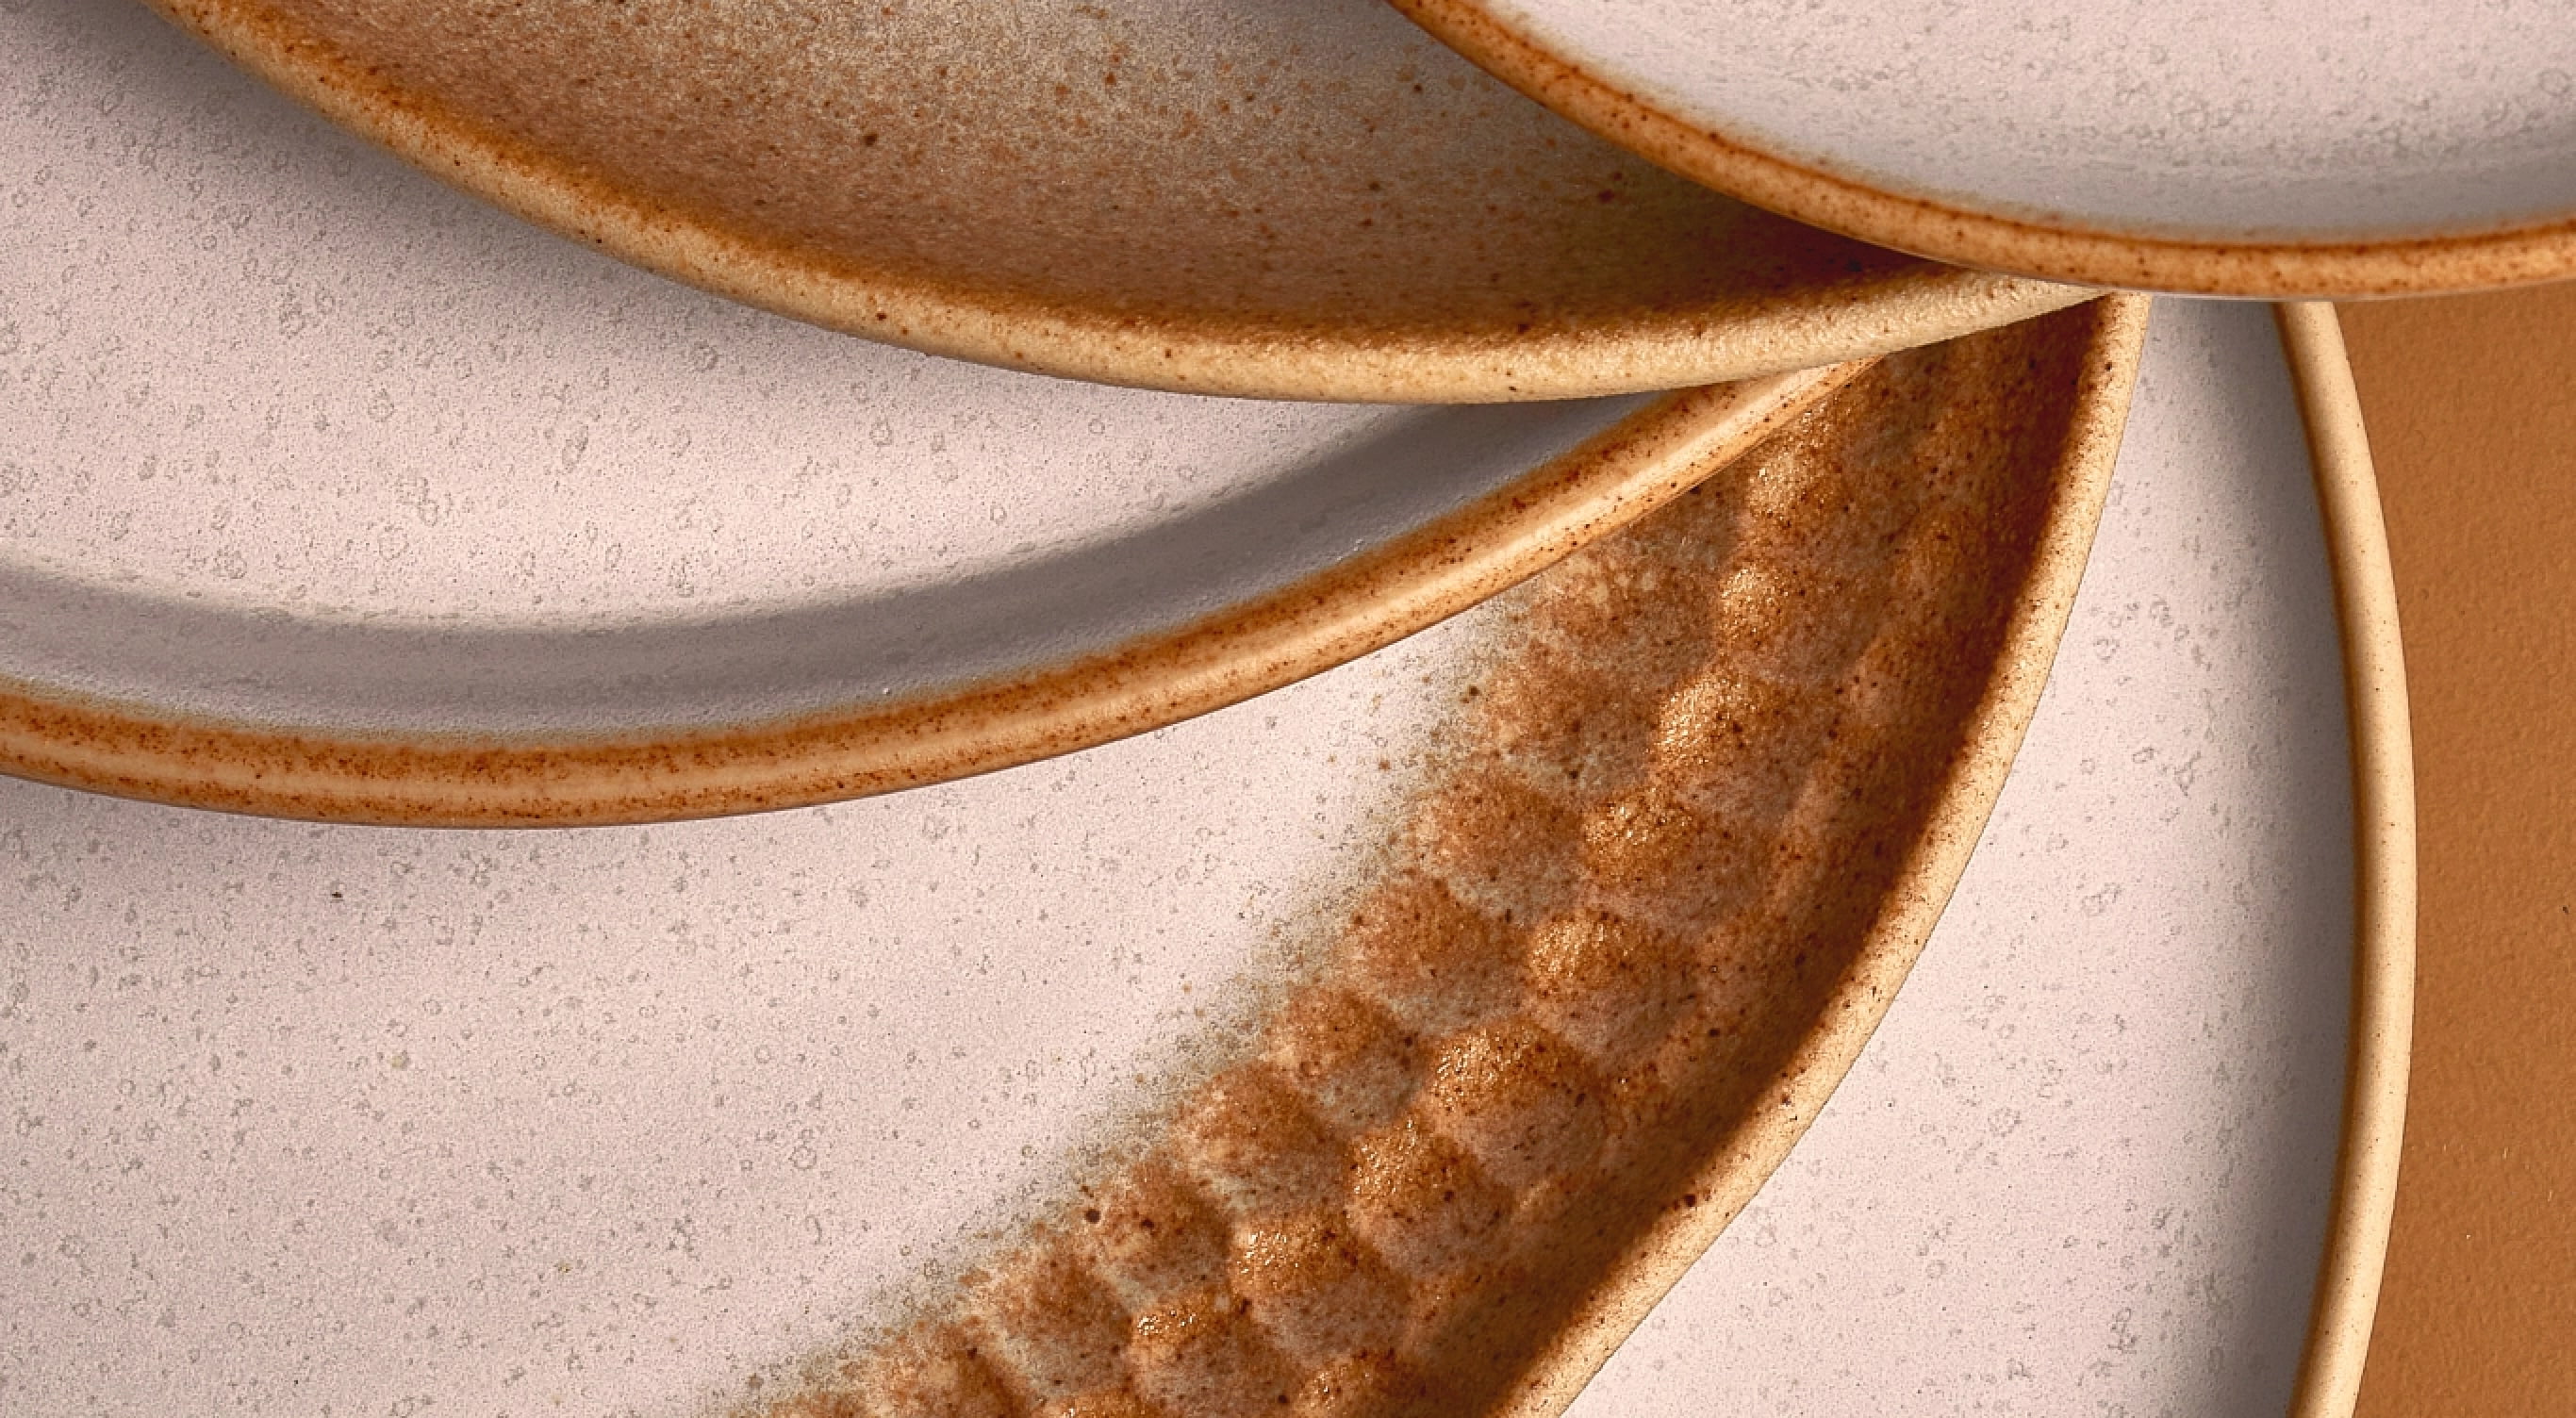 Kevala Ceramics in partnership with Four Seasons